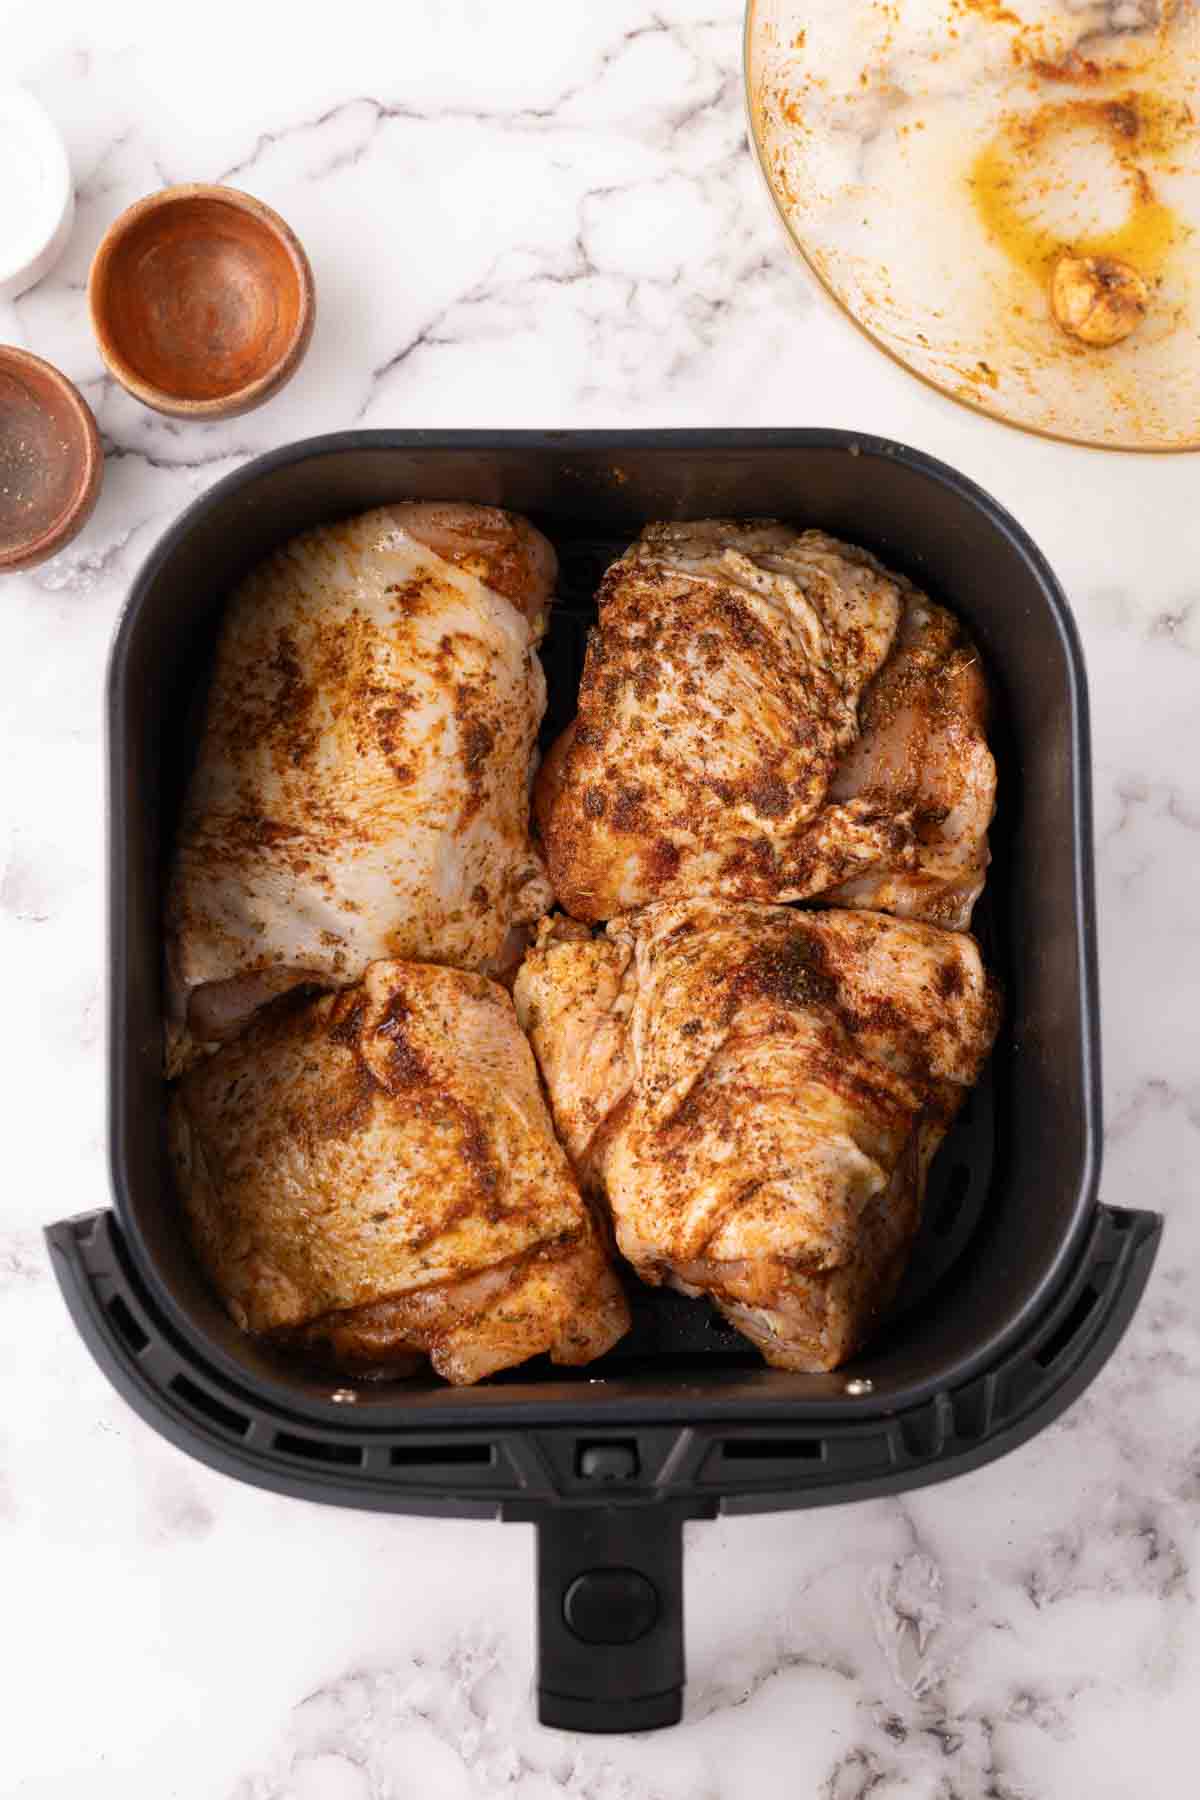 uncooked chicken thighs in a black air fryer basket.